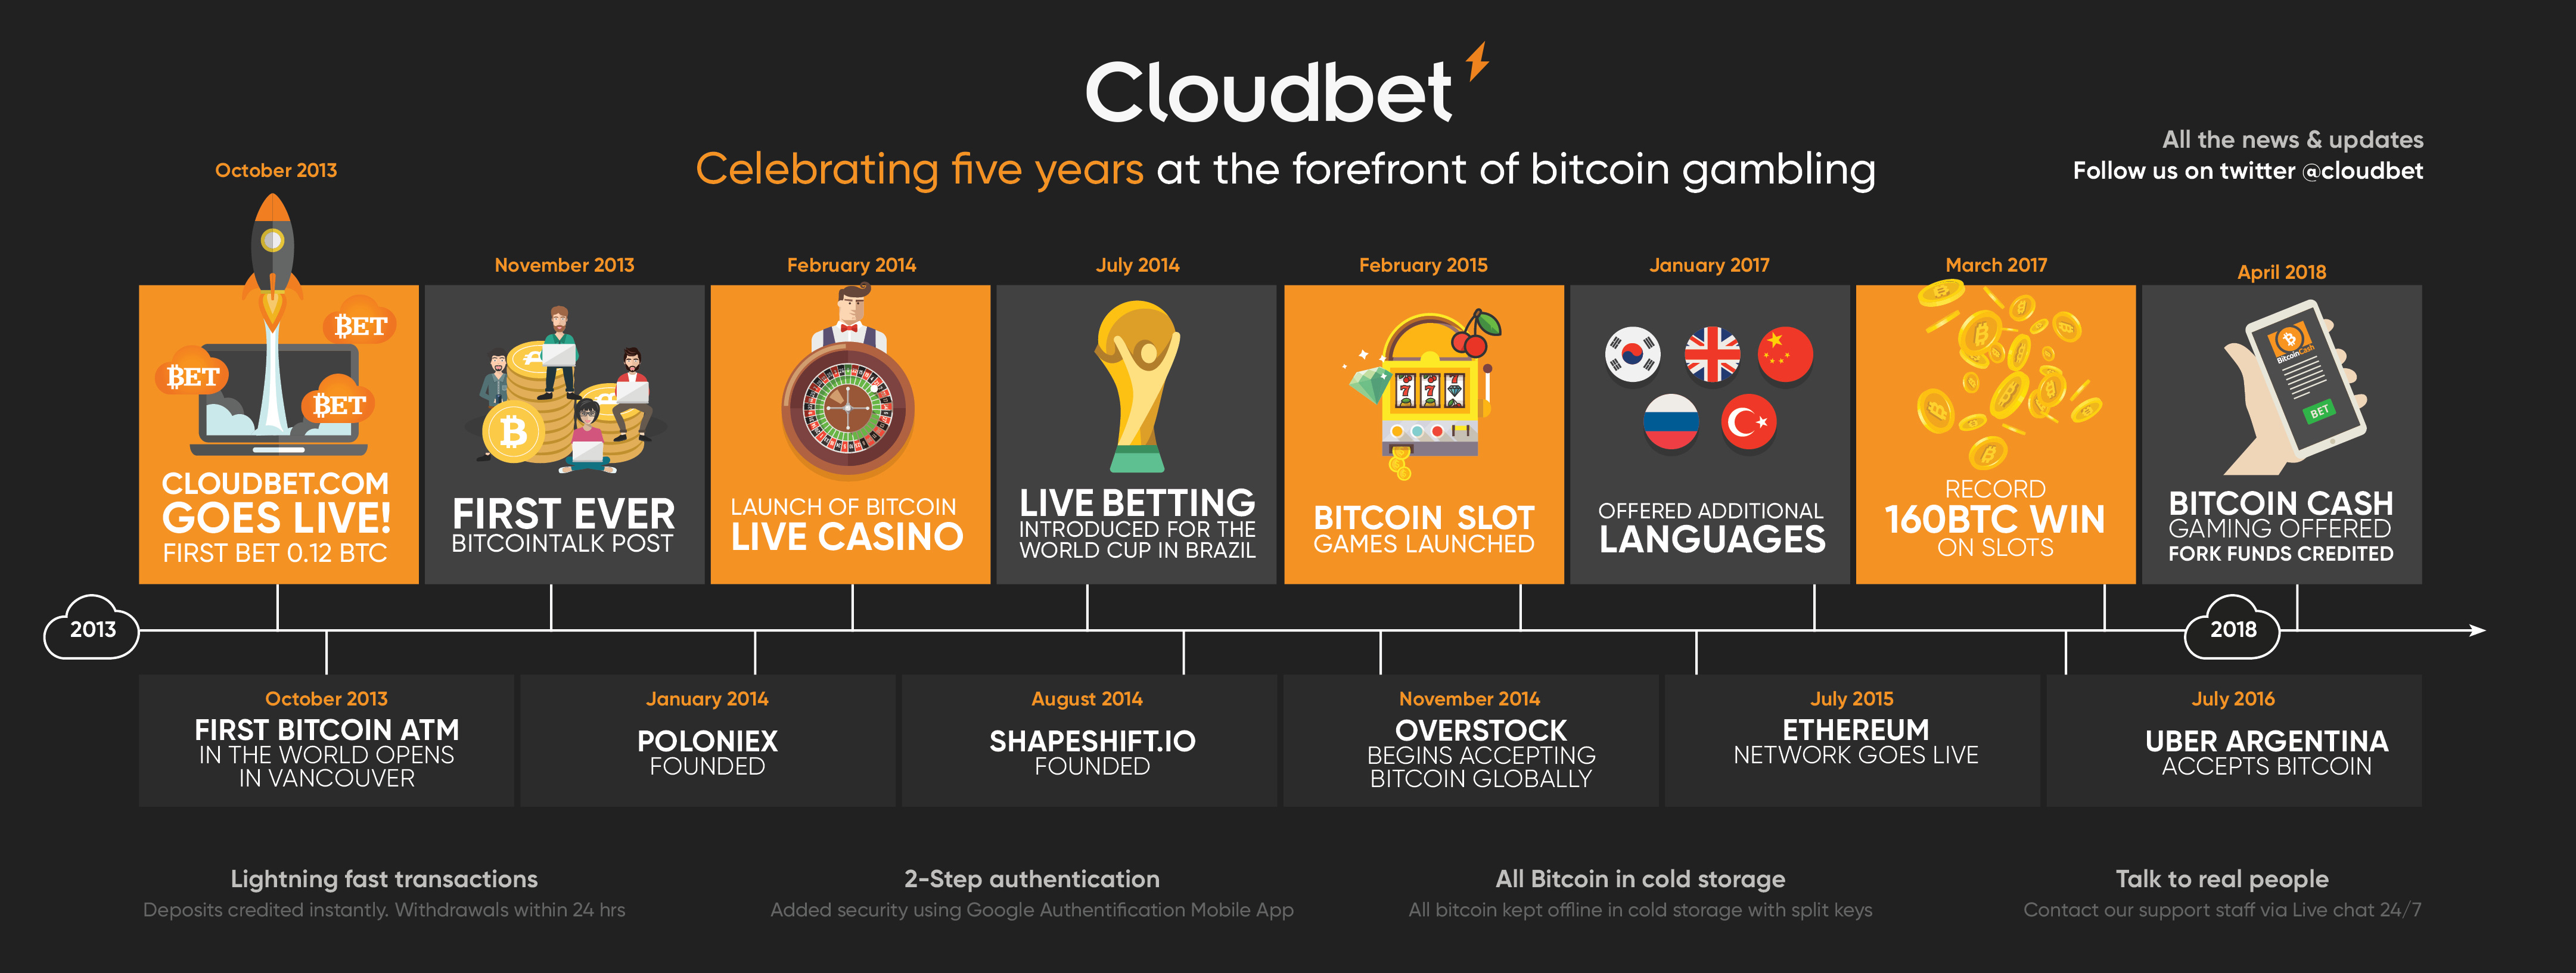 Infographic of Cloudbet's journey